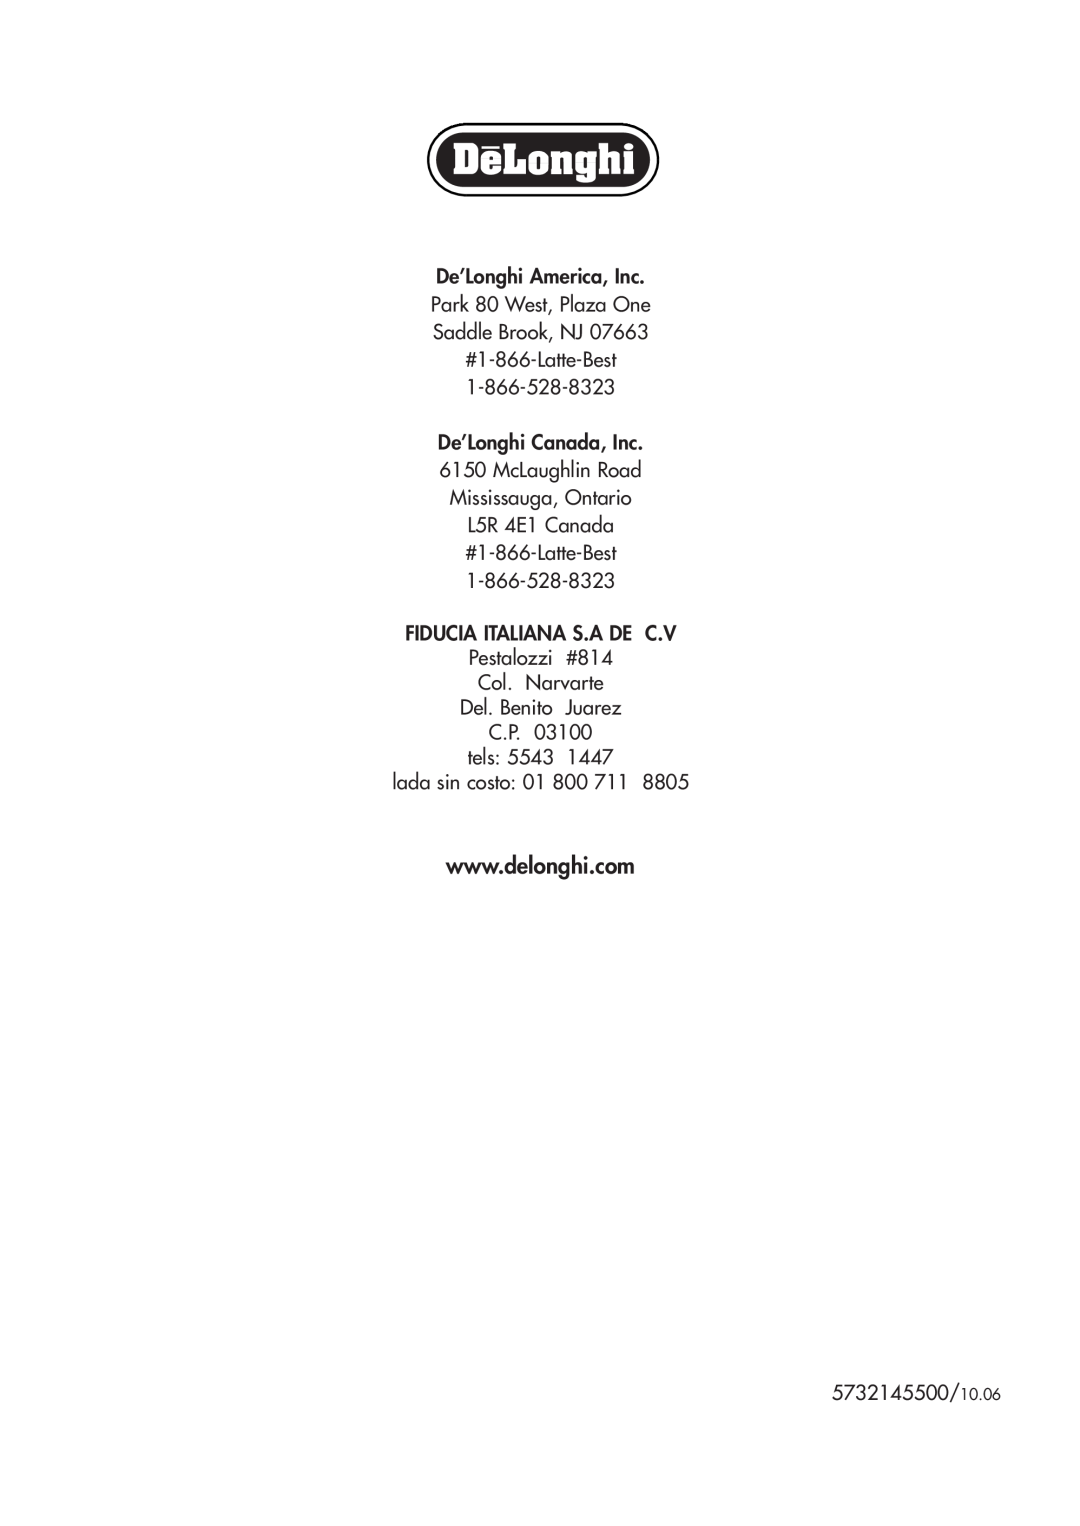 DeLonghi HKKMDI003 manual De’Longhi America, Inc Park 80 West, Plaza One Saddle Brook, NJ, #1-866-Latte-Best 